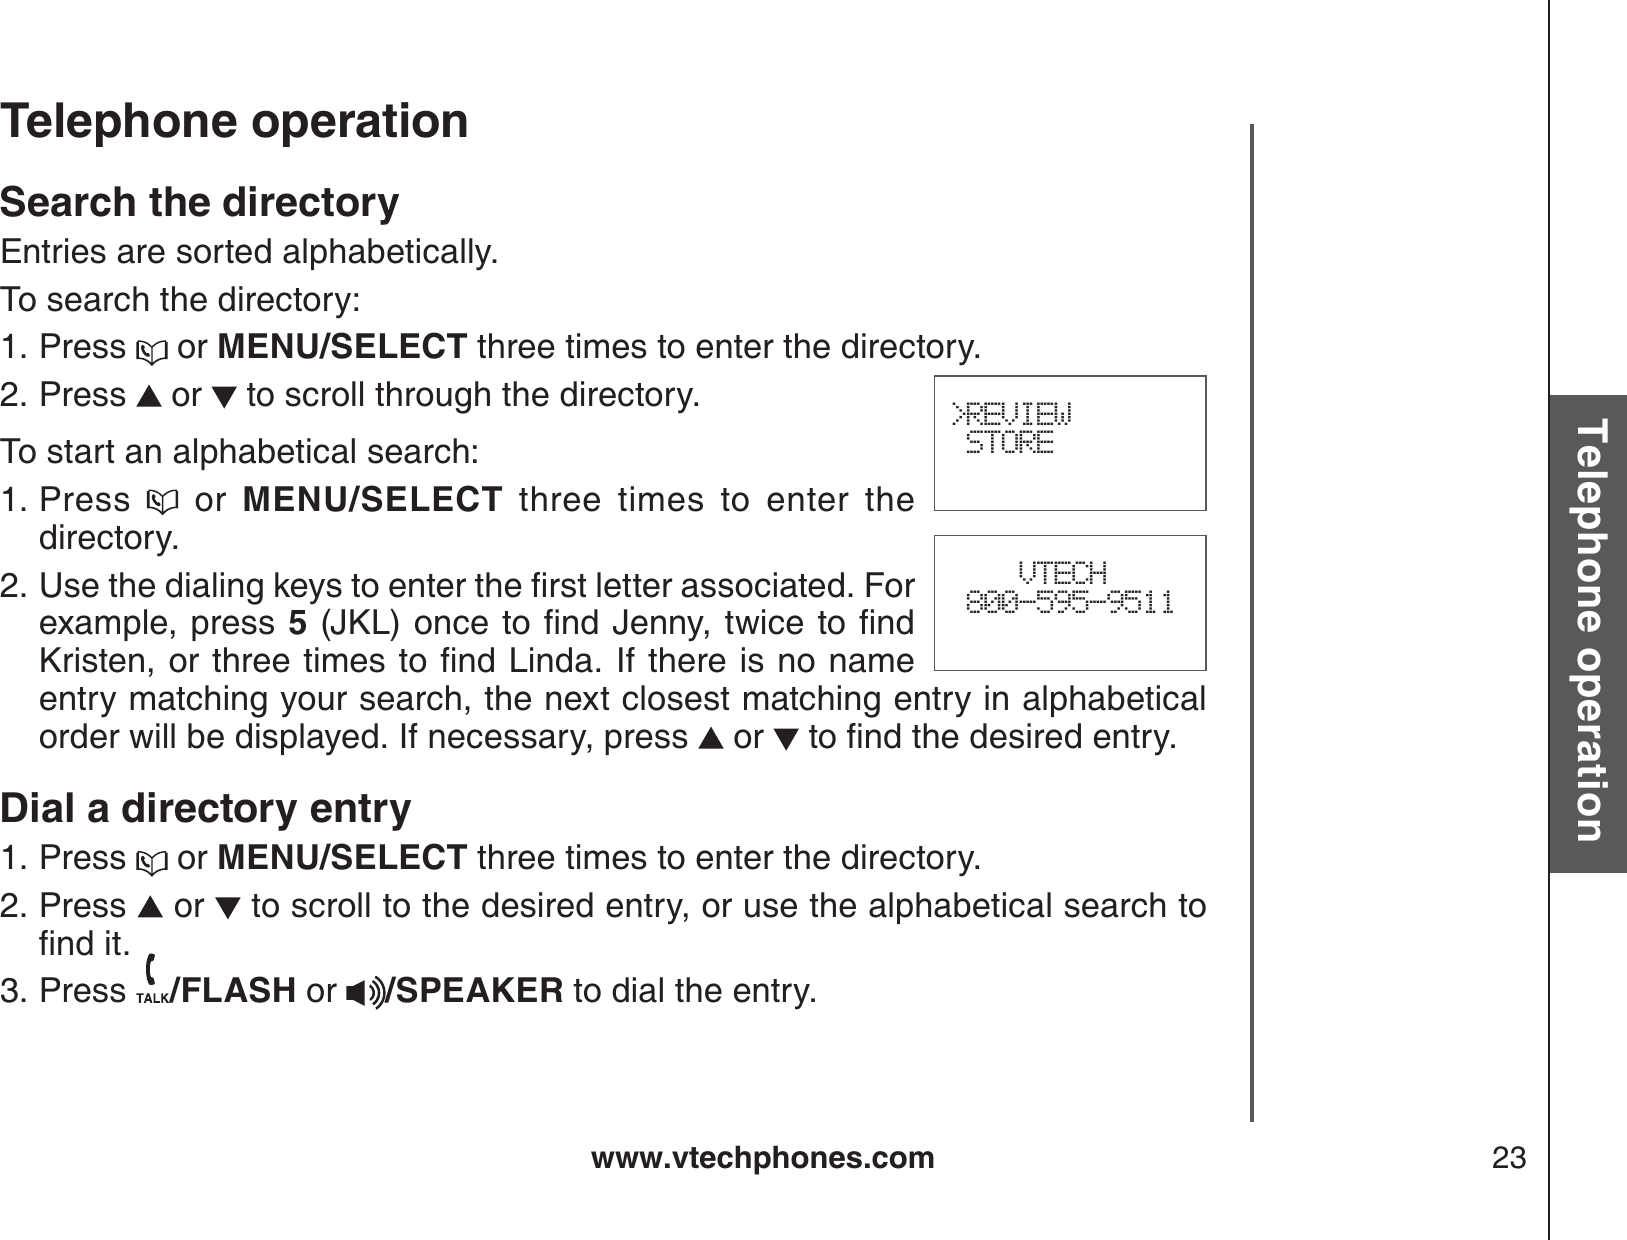 www.vtechphones.com 23Basic operationTelephone operationTelephone operationSearch the directoryEntries are sorted alphabetically. To search the directory:Press   or MENU/SELECT three times to enter the directory.Press   or   to scroll through the directory.To start an alphabetical search:Press   or MENU/SELECT three times to enter the directory.7UGVJGFKCNKPIMG[UVQGPVGTVJGſTUVNGVVGTCUUQEKCVGF(QTexample, press 5,-.QPEGVQſPF,GPP[VYKEGVQſPF-TKUVGPQTVJTGGVKOGUVQſPF.KPFC+HVJGTGKUPQPCOGentry matching your search, the next closest matching entry in alphabetical order will be displayed. If necessary, press   or  VQſPFVJGFGUKTGFGPVT[Dial a directory entryPress   or MENU/SELECT three times to enter the directory.Press   or   to scroll to the desired entry, or use the alphabetical search to ſPFKVPress  /FLASH or /SPEAKER to dial the entry.1.2.1.2.1.2.3.&gt;REVIEW STORE    VTECH 800-595-9511